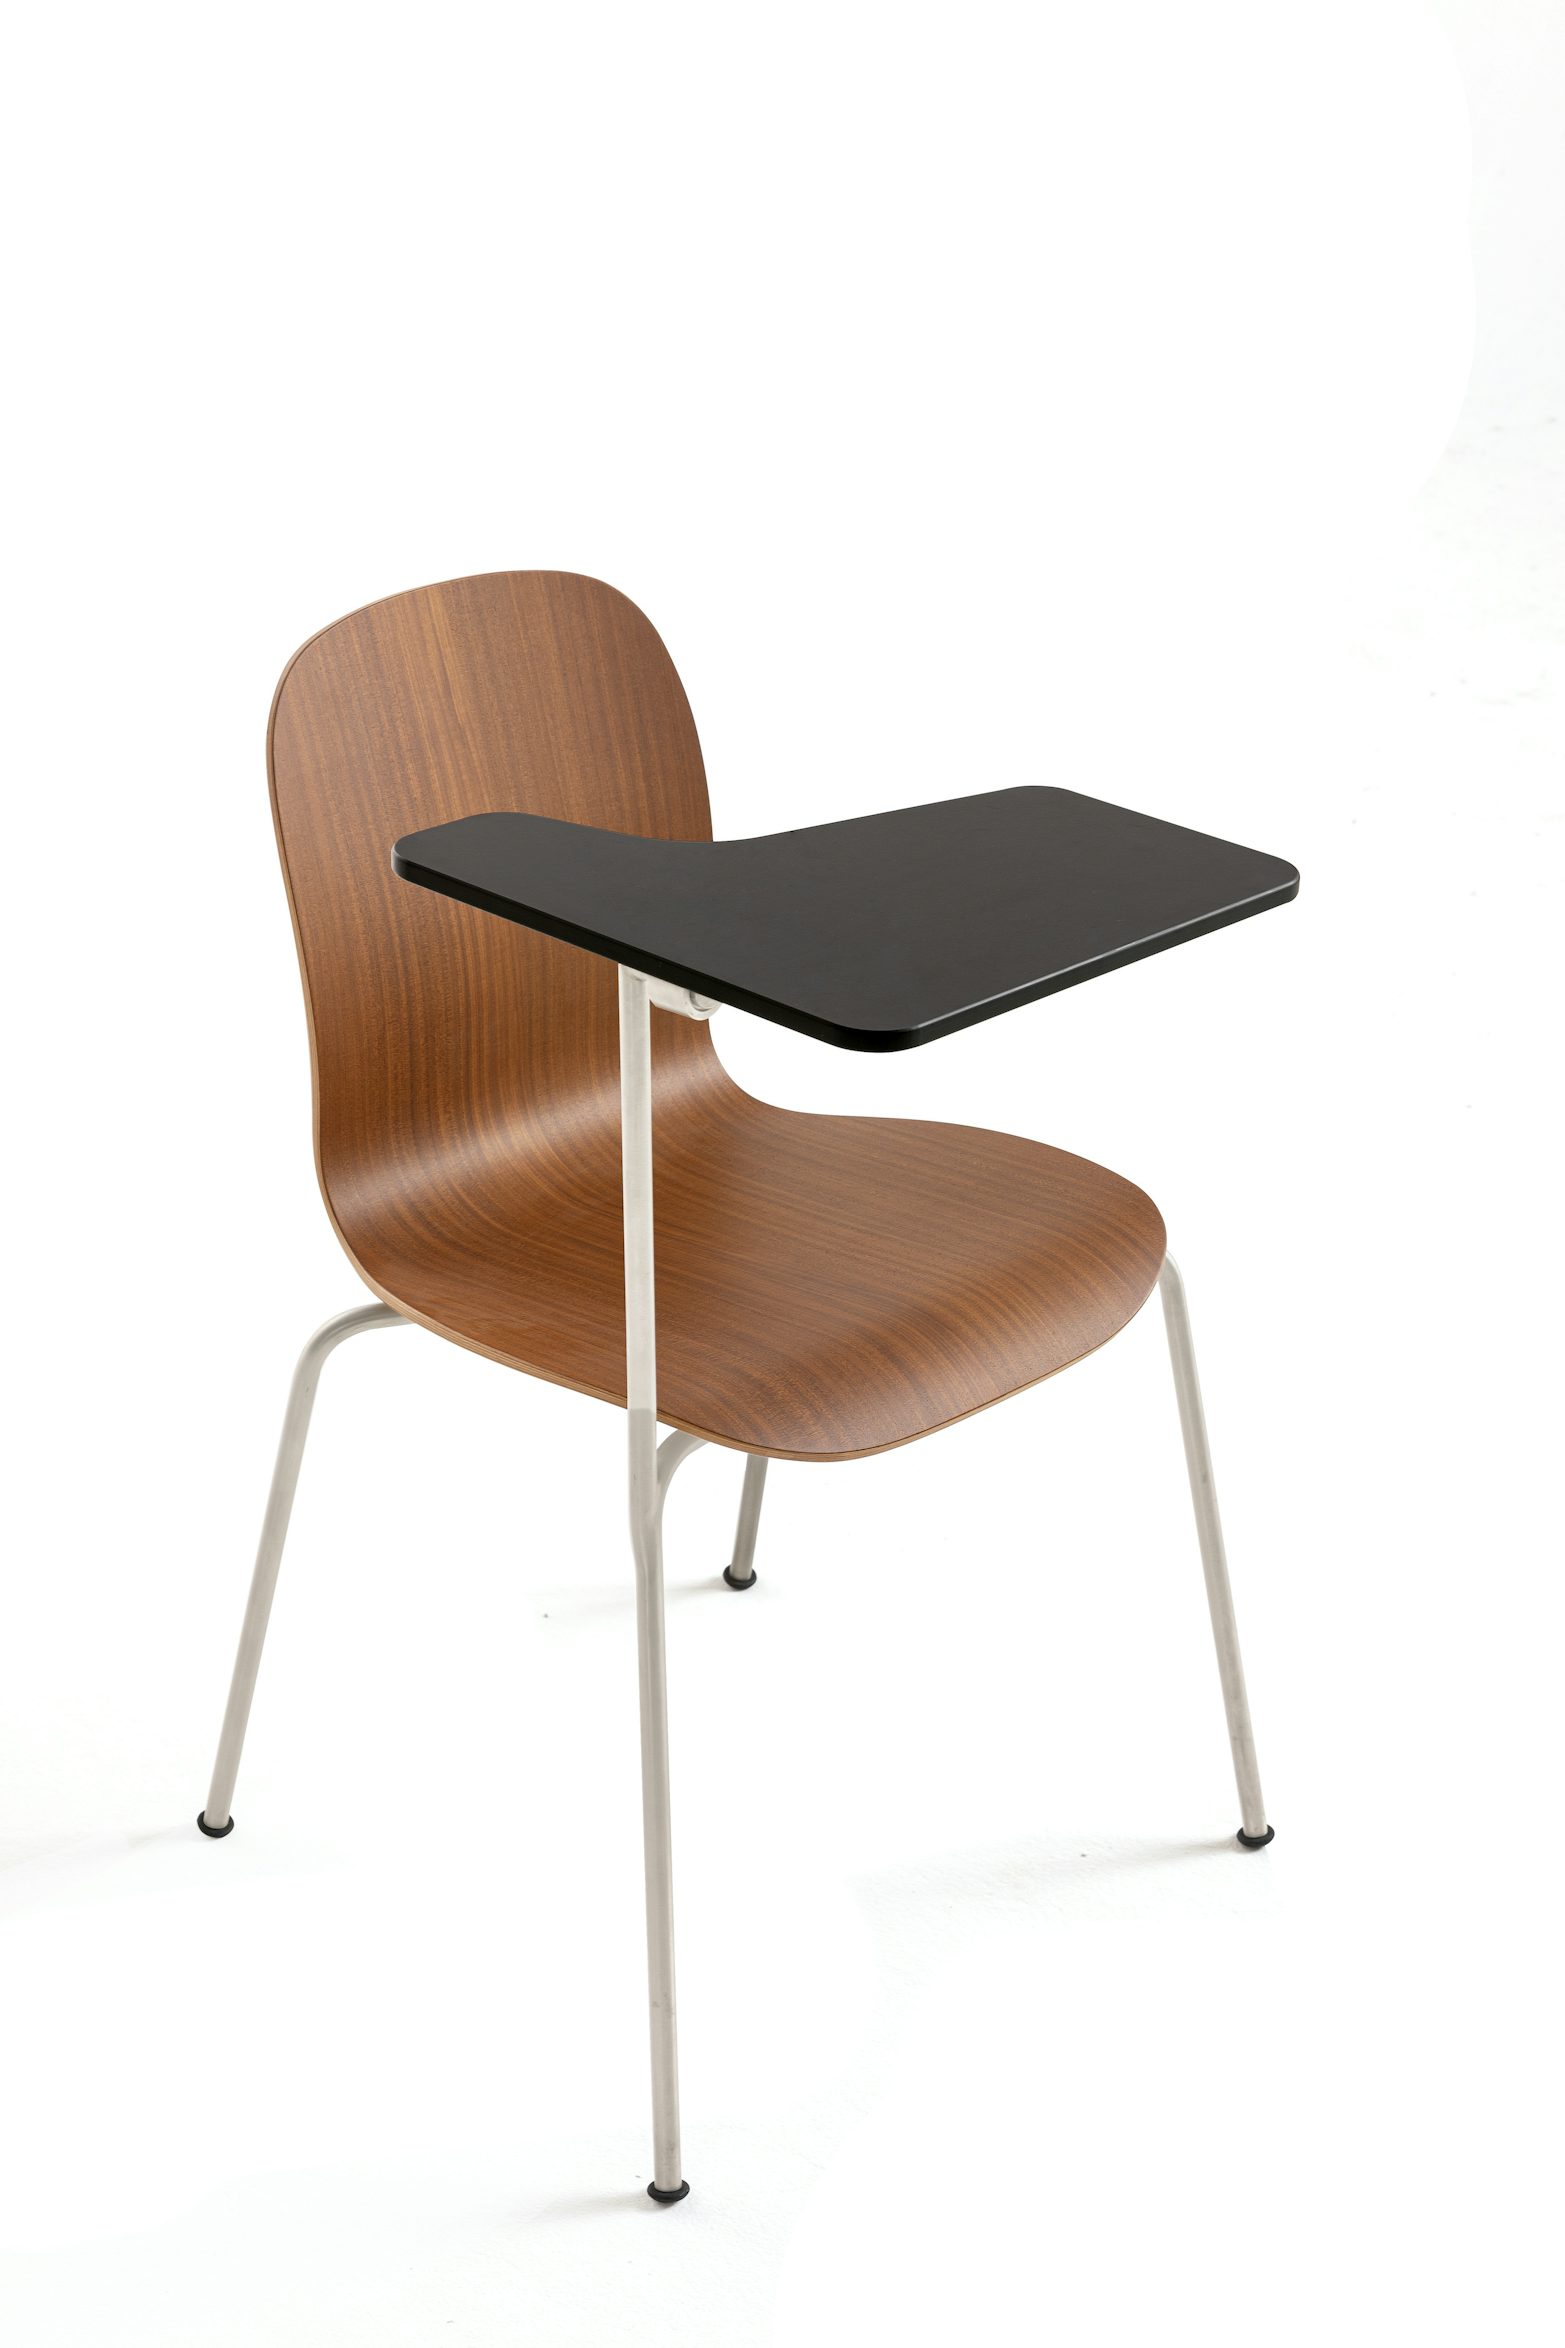 Tate wood chair jasper morrison cappellini 1